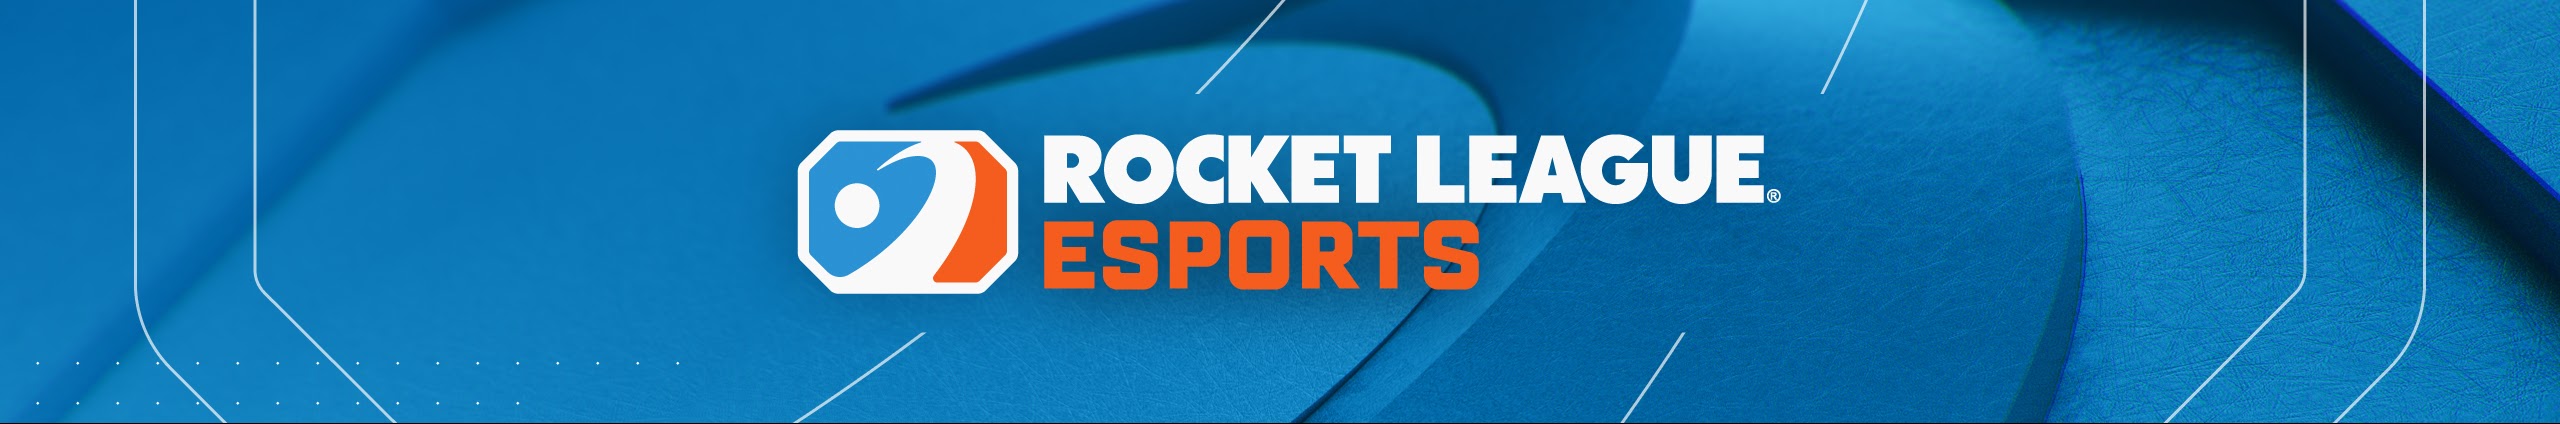 Rocket League Esports - YouTube